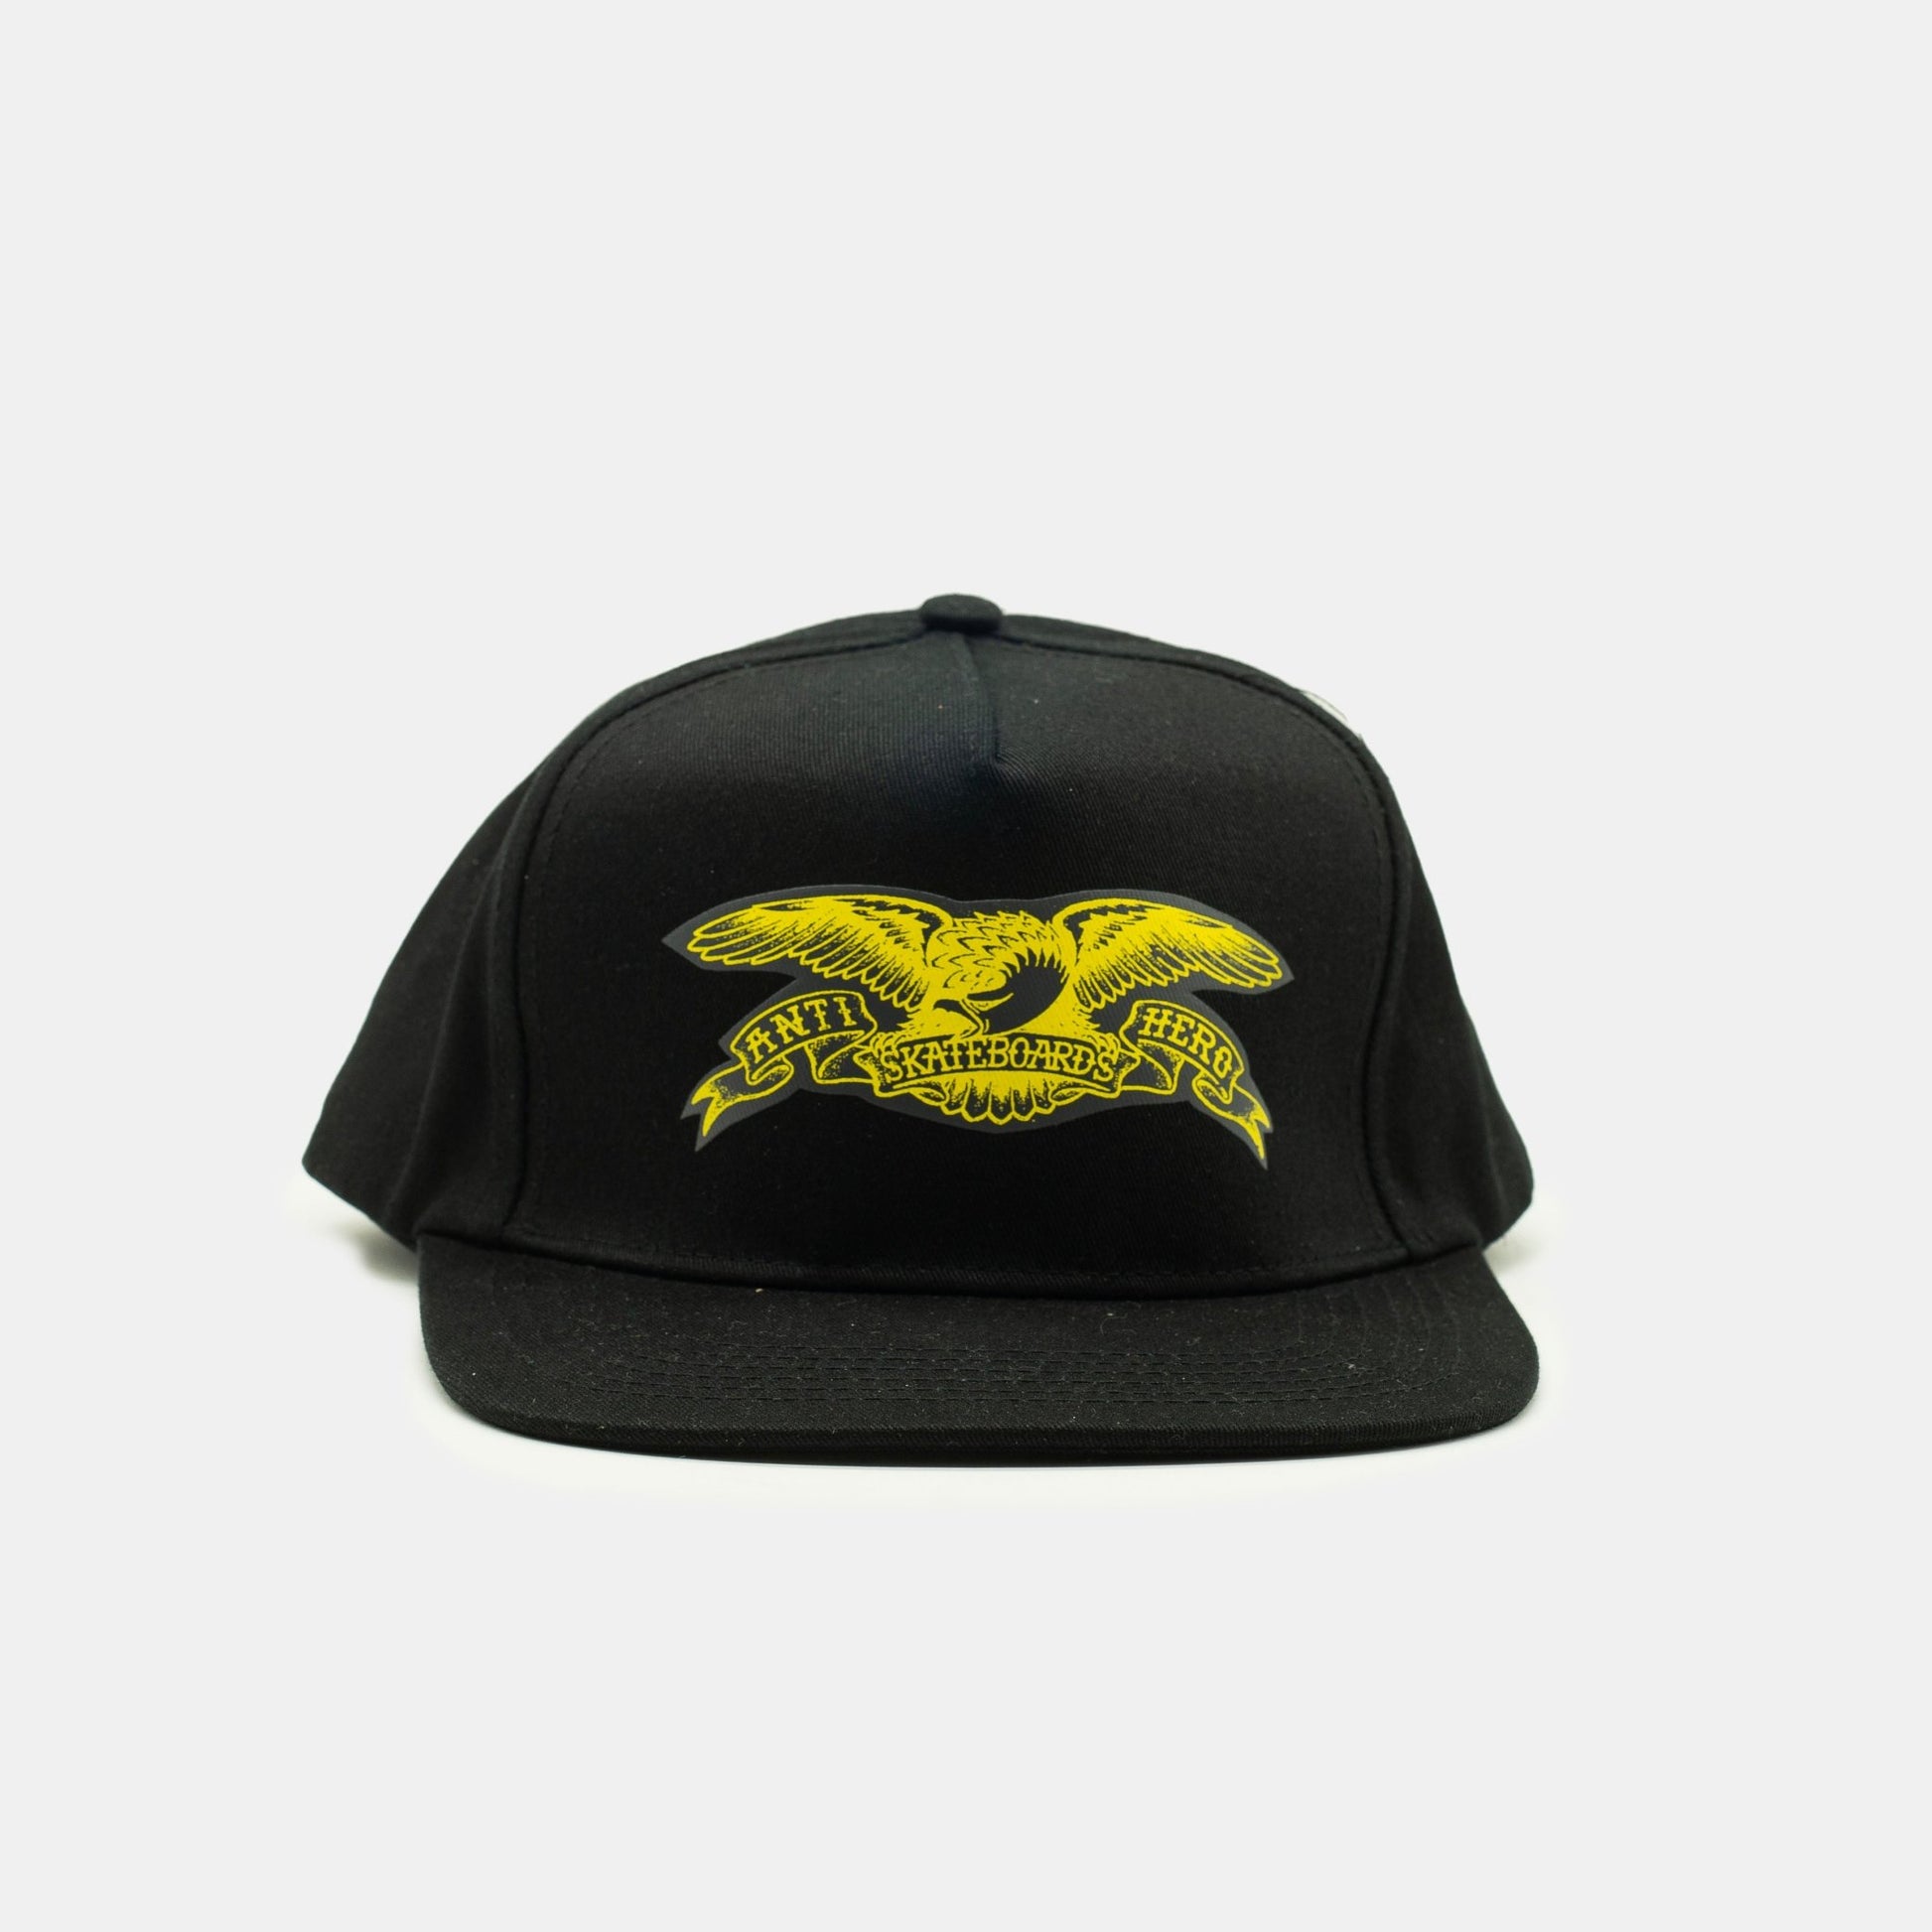 Anti-Hero - Basic Eagle Hat - Black / Yellow - Parliamentskateshop